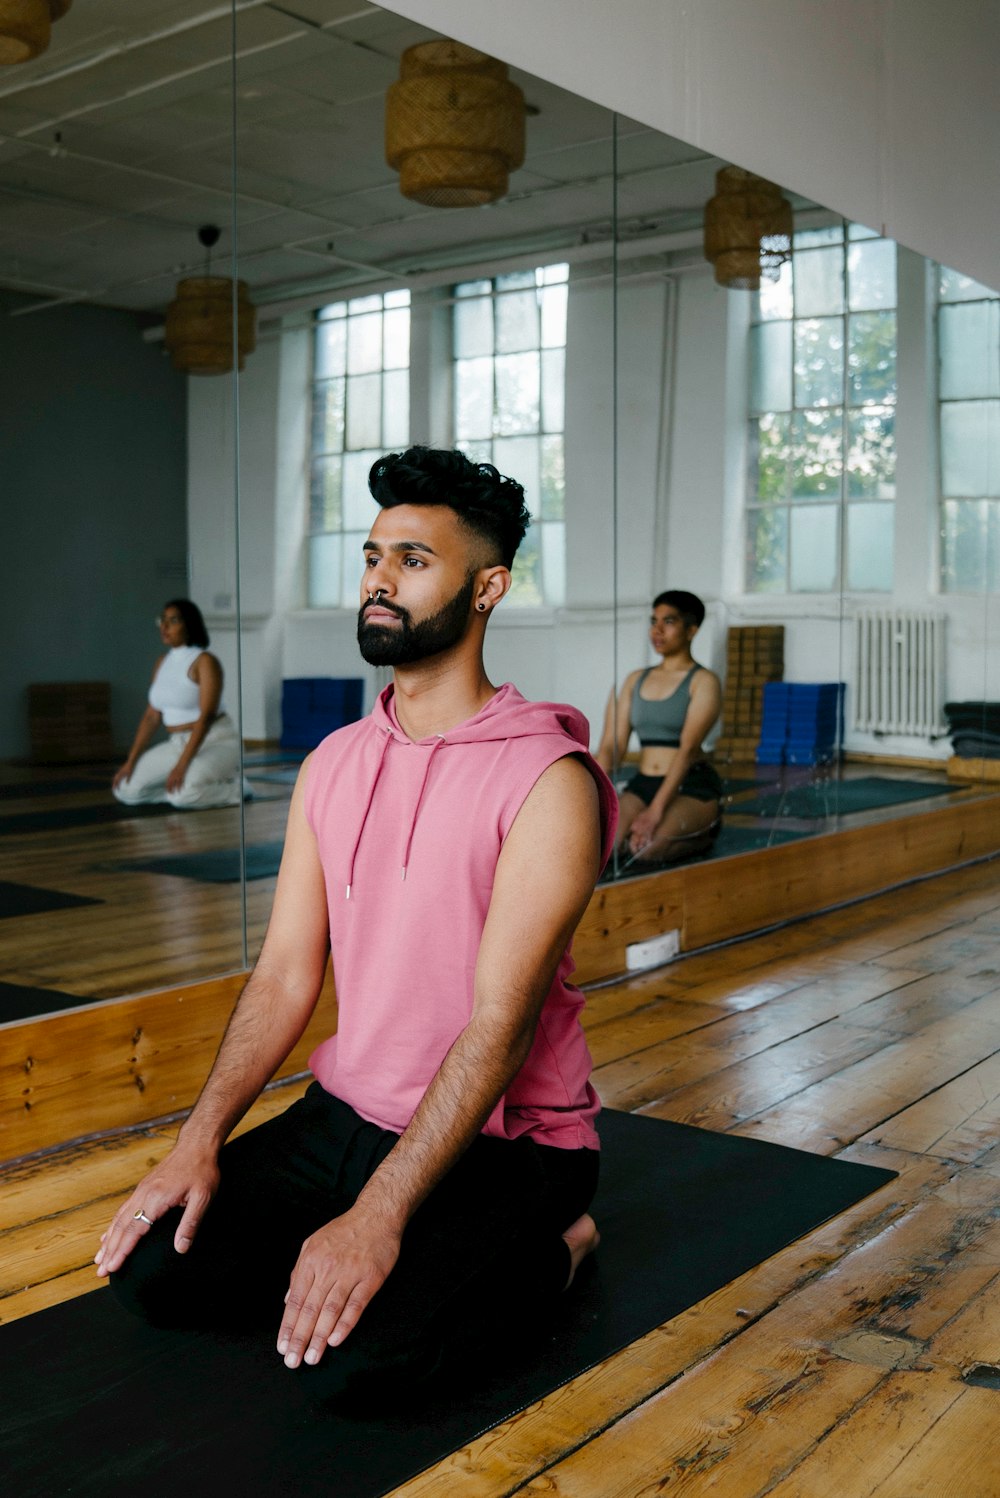 a man sitting on a yoga mat in a gym